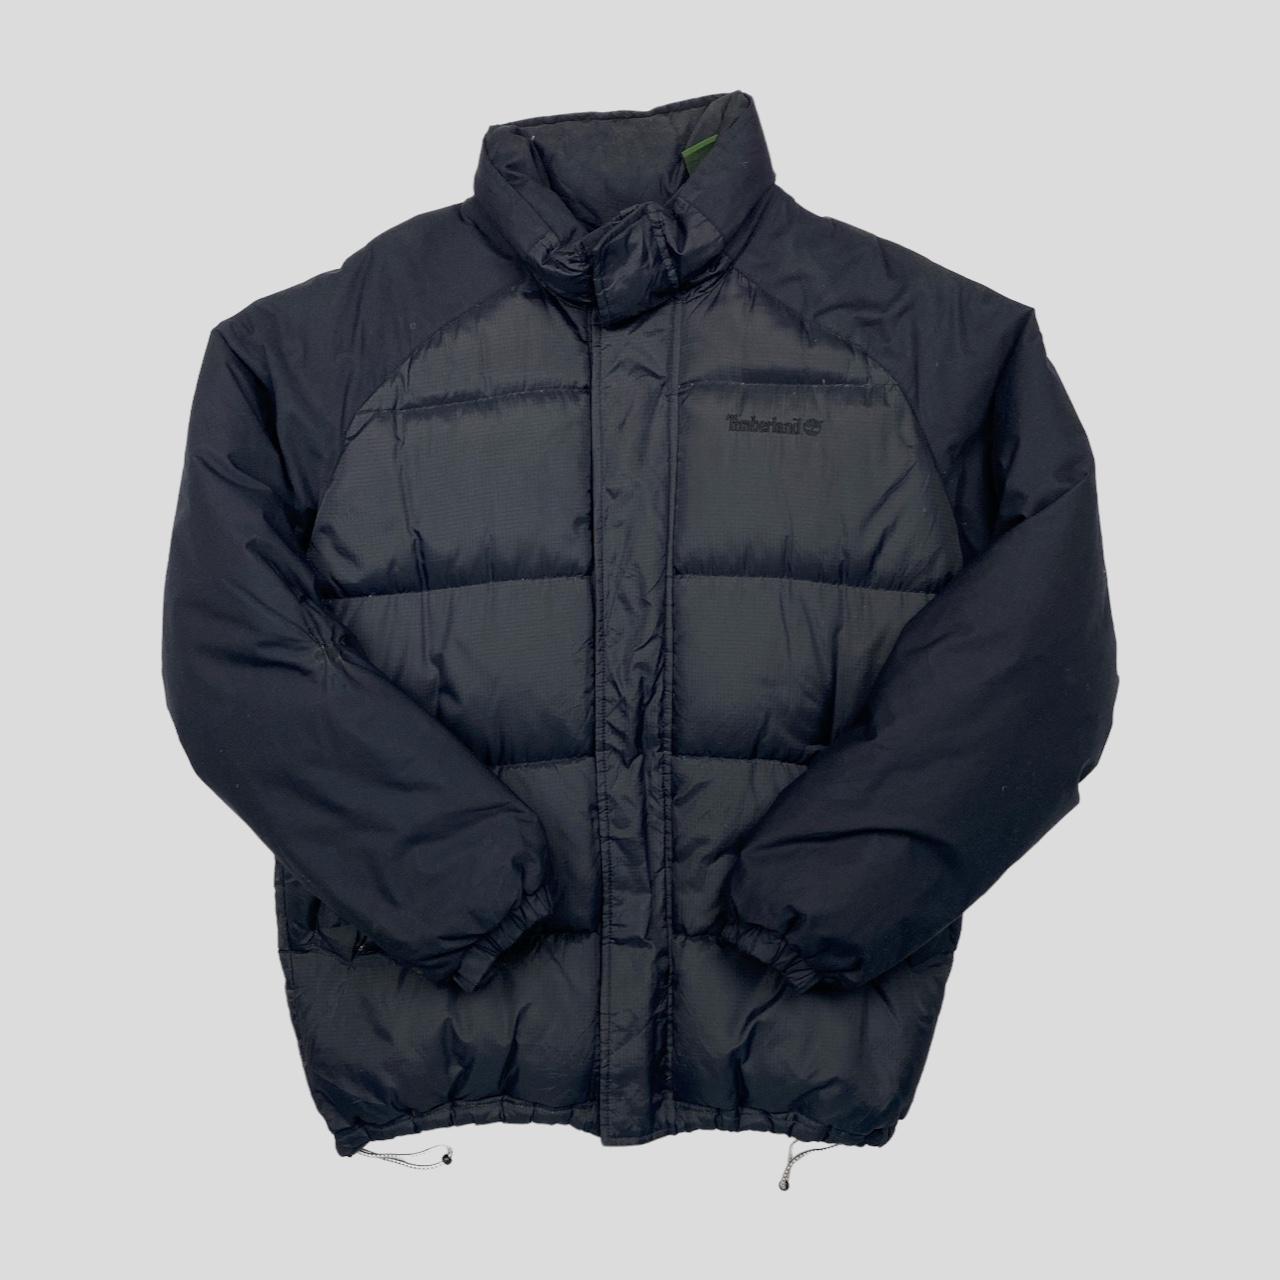 Timberland Puffer Jacket Black colour way, quality... - Depop